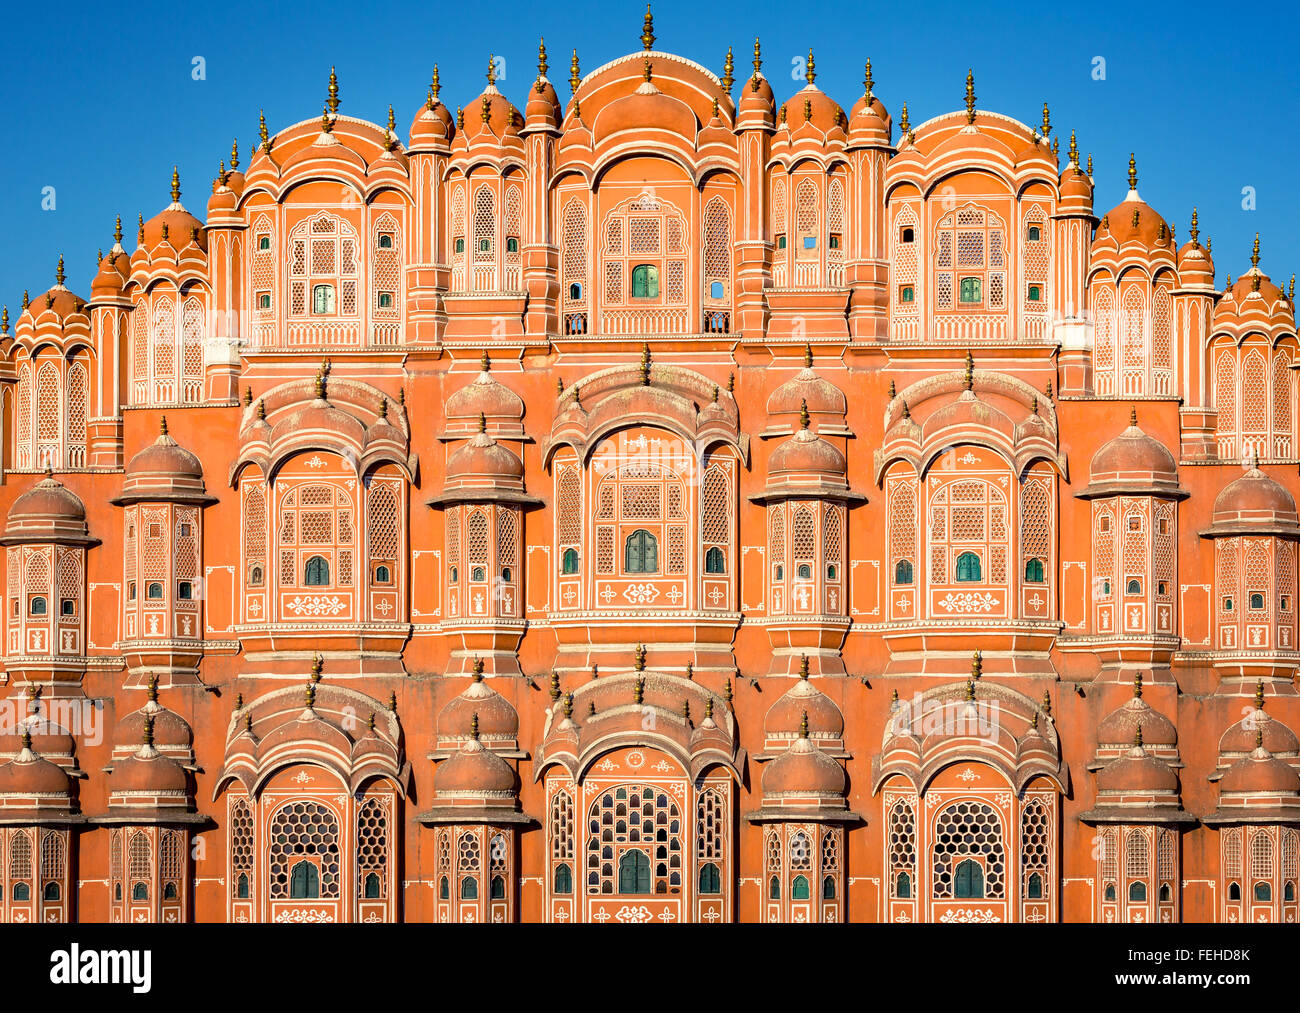 Façade de l'Hawa Mahal, le palais des vents, Jaipur, Rajasthan, Inde Banque D'Images